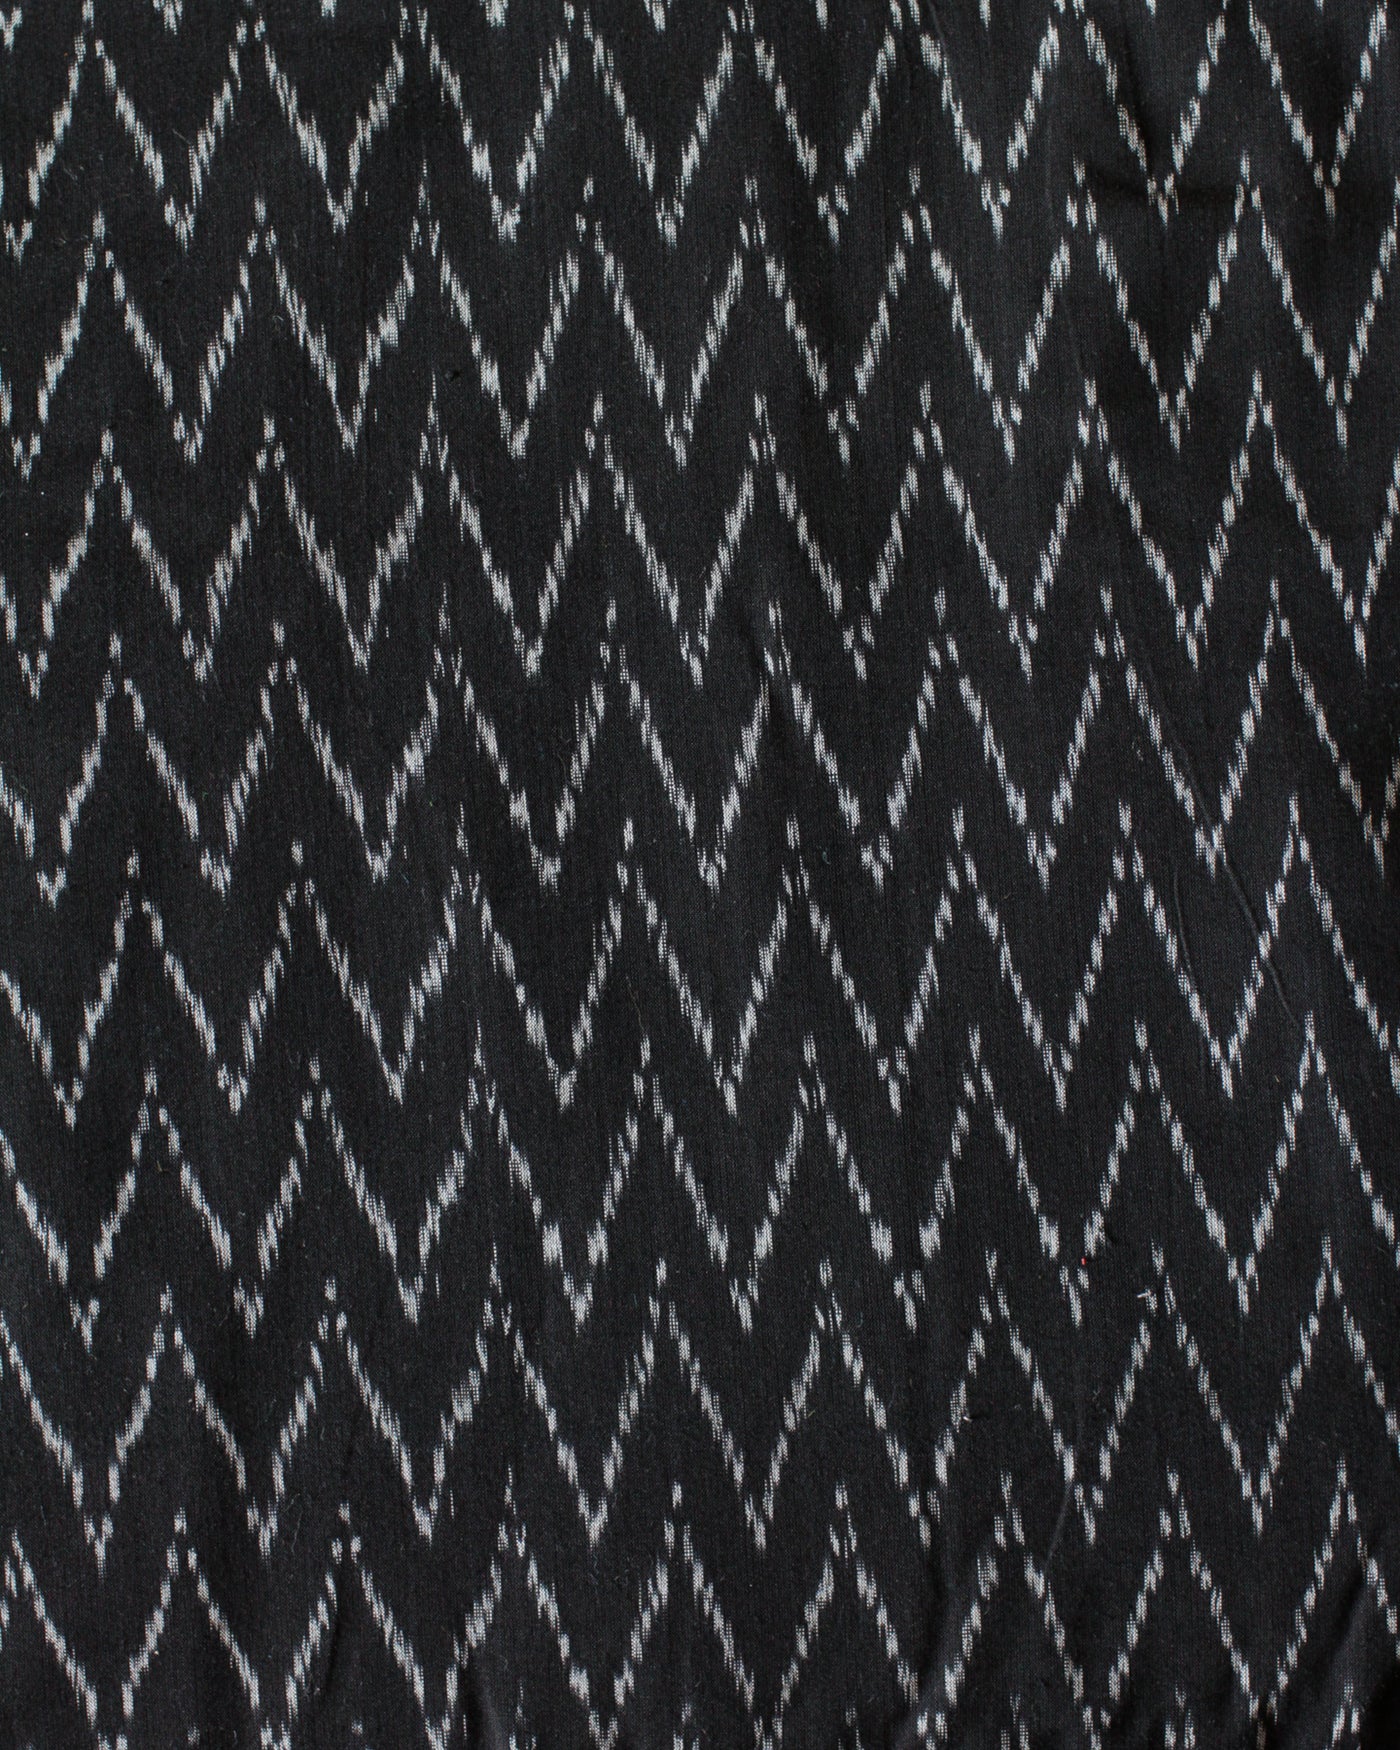 Handloom Ikat Fabric #009 - Black Raven